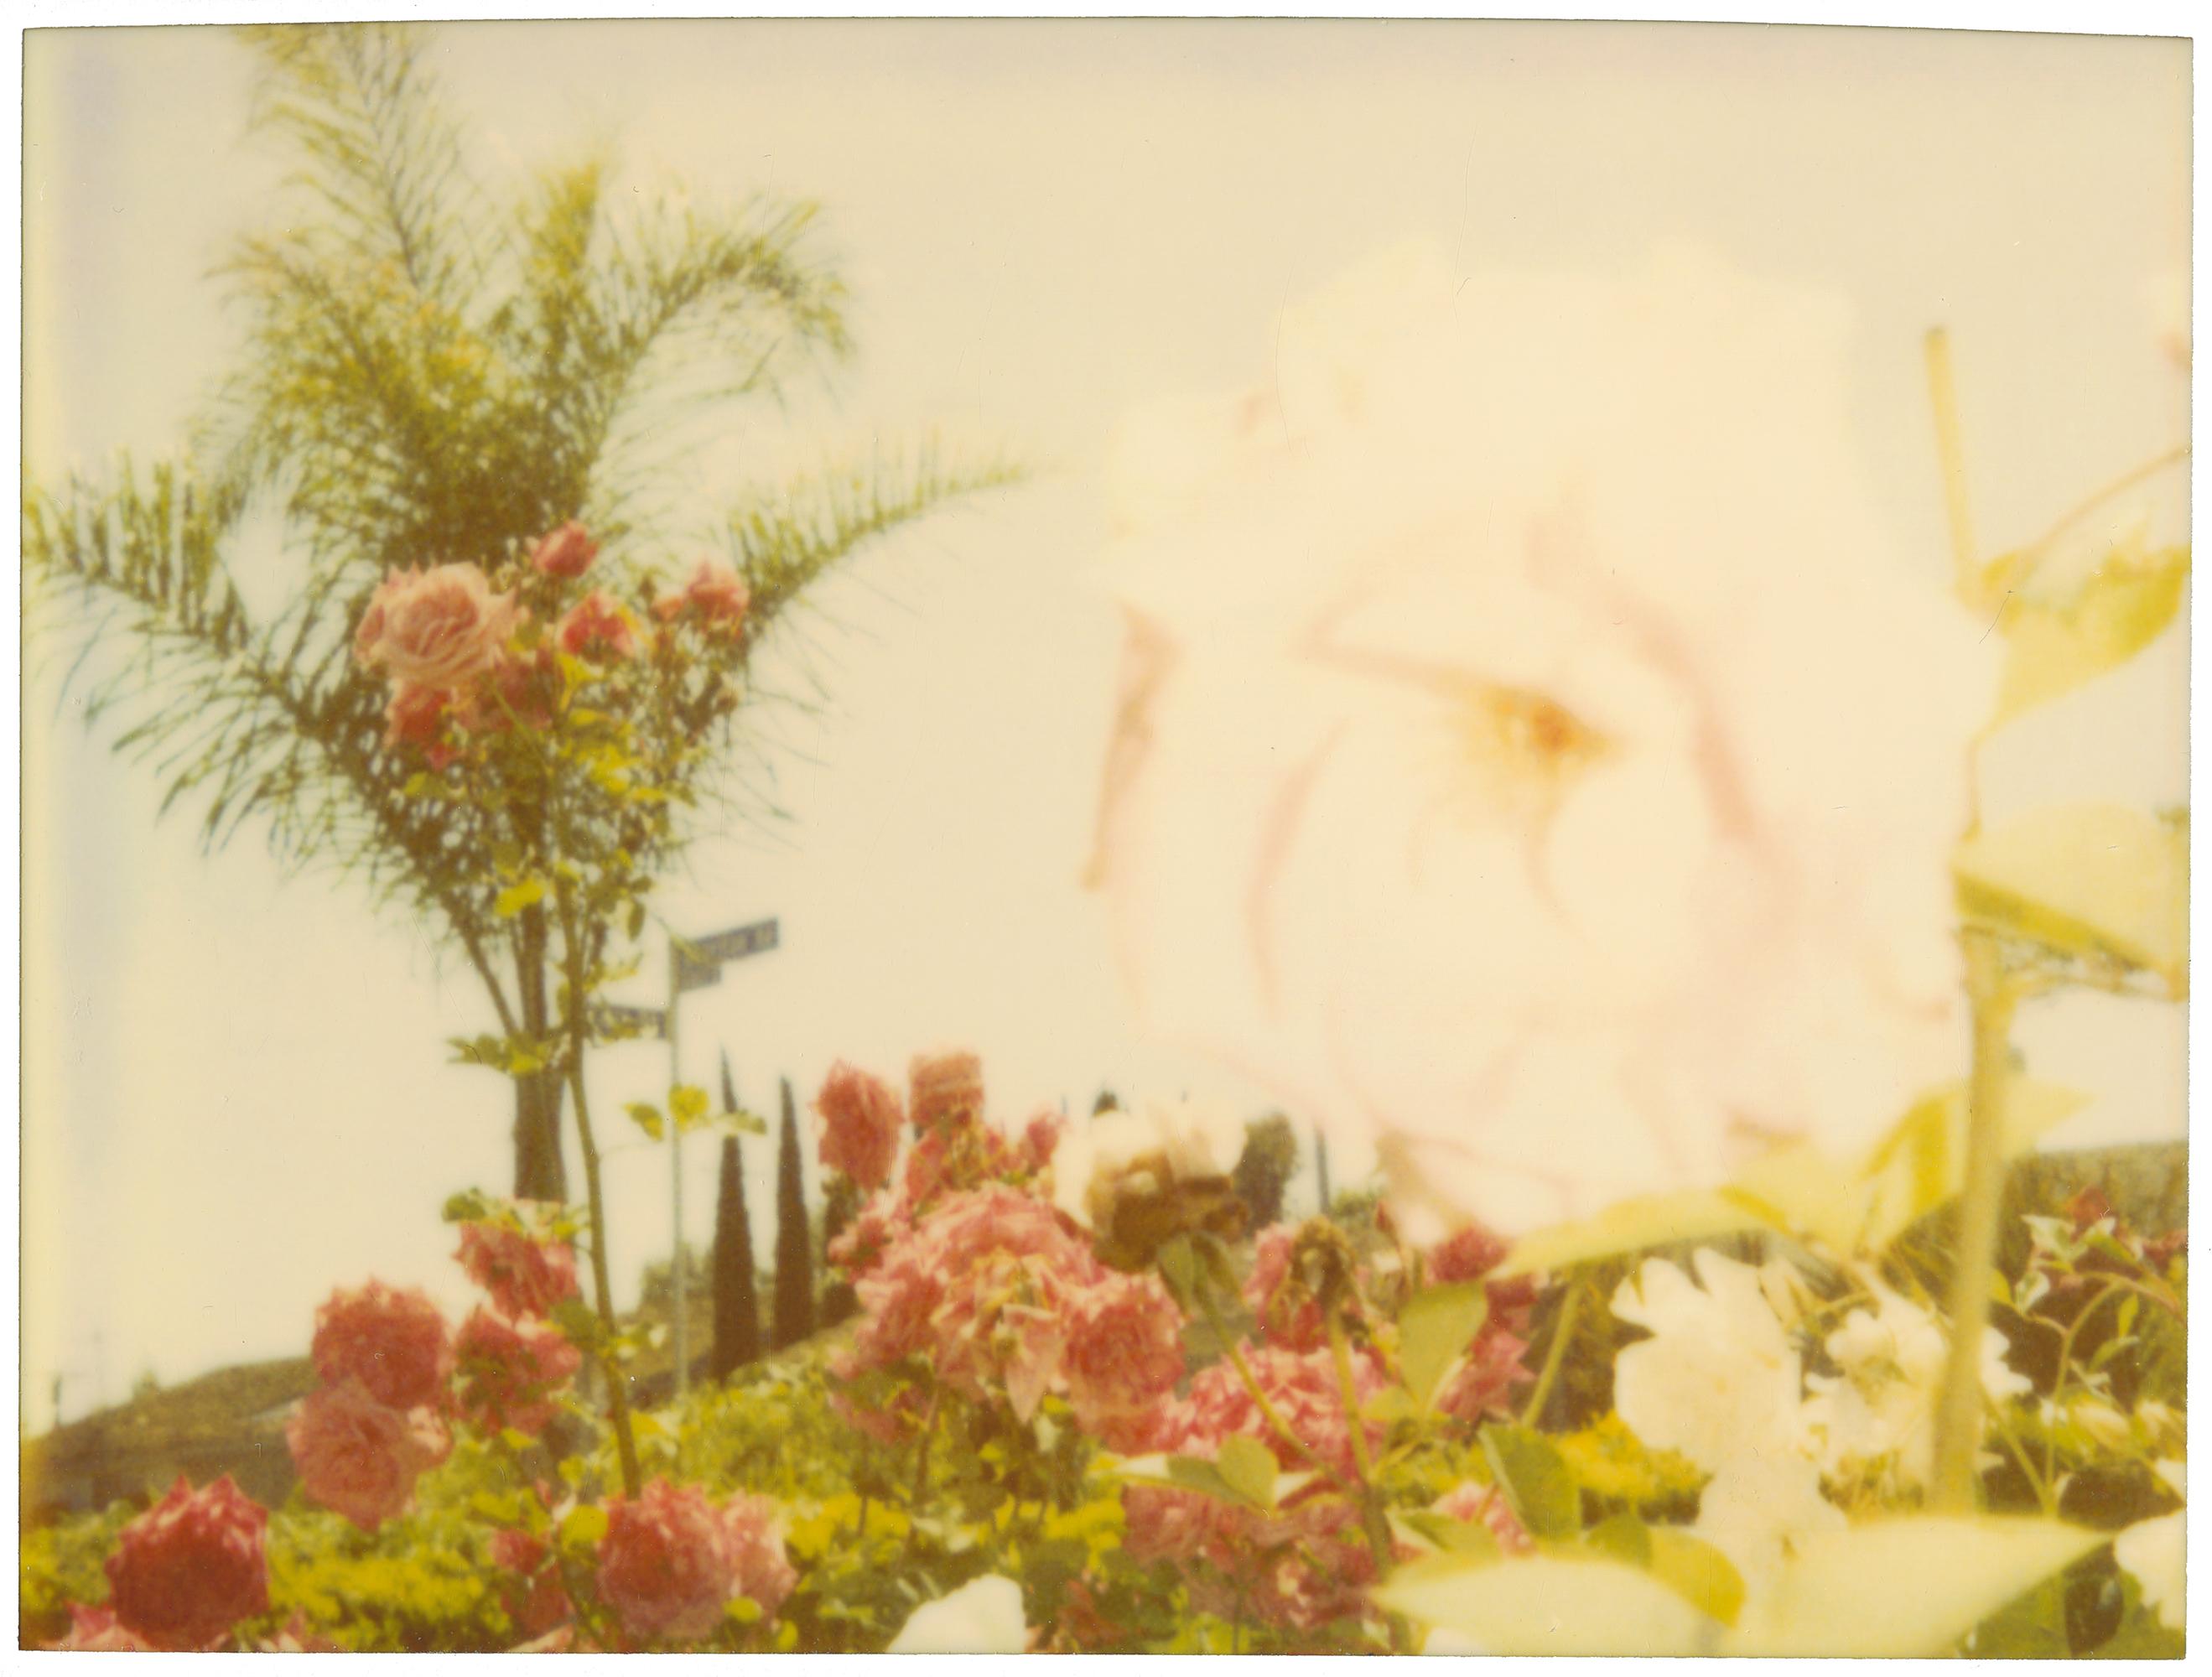 Stefanie Schneider Landscape Photograph - Pink Rose (Suburbia) - analog, mounted